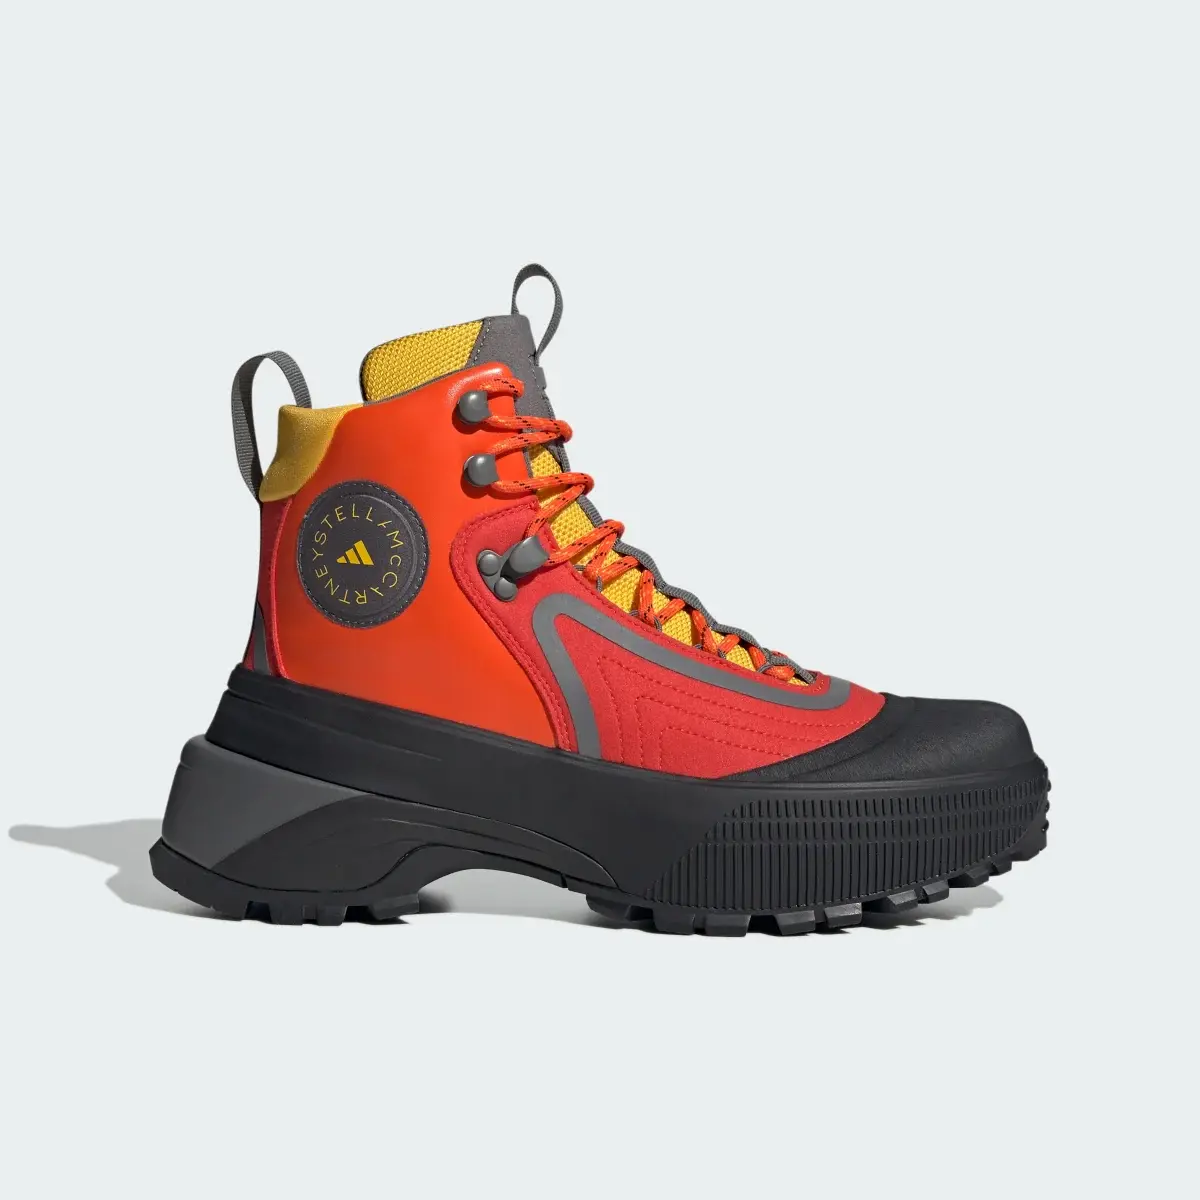 Adidas by Stella McCartney x Terrex Hiking Boots. 2